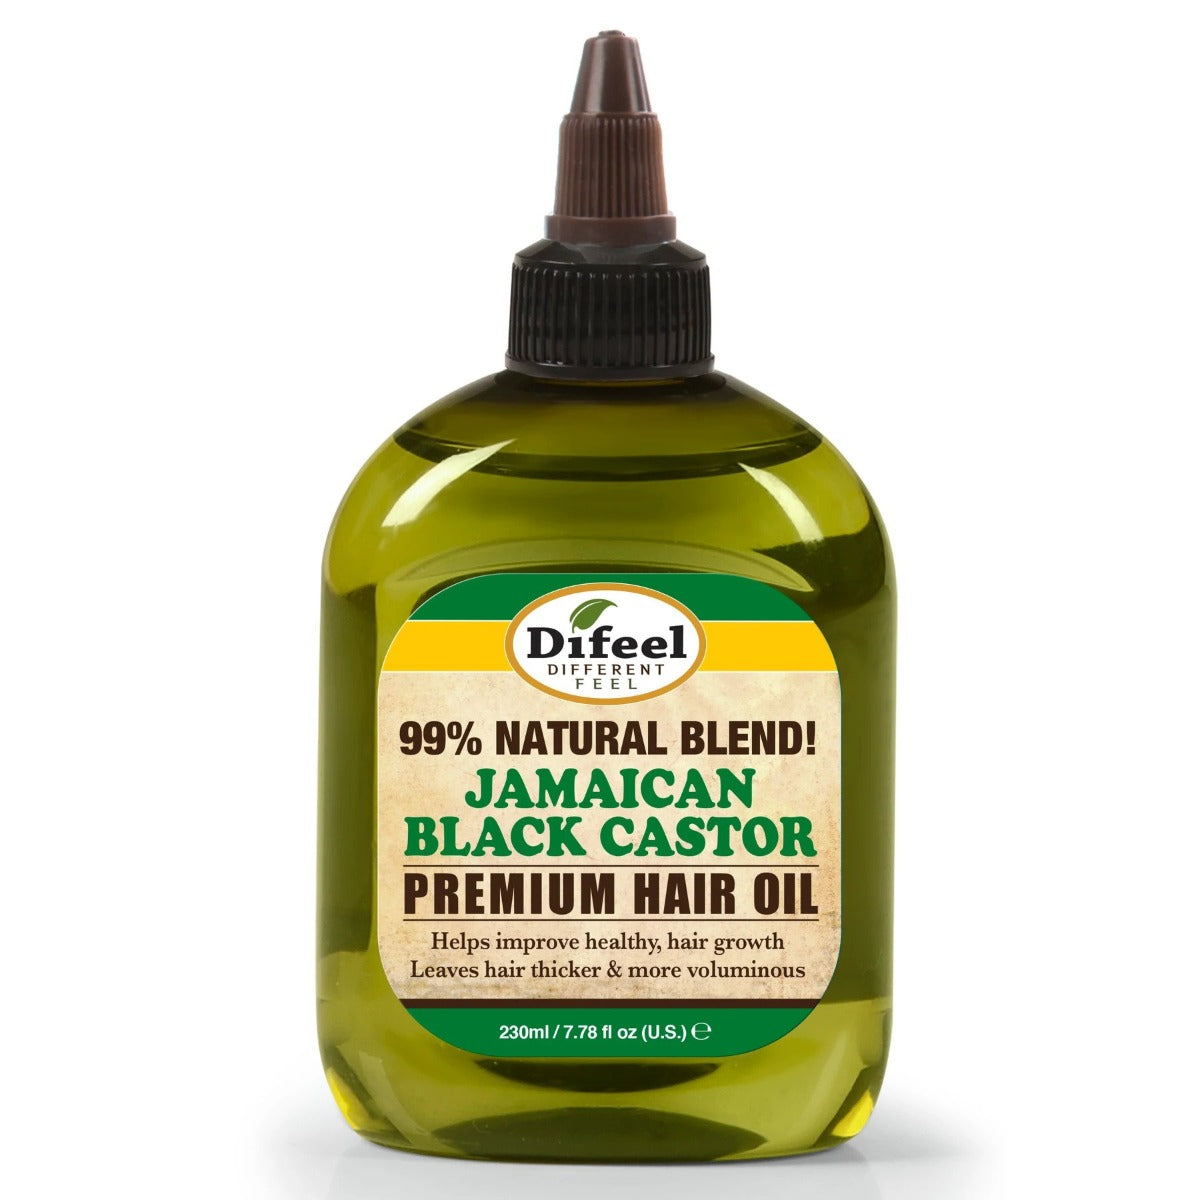 Difeel Jamaican Black Castor Premium Hair Oil 230ml